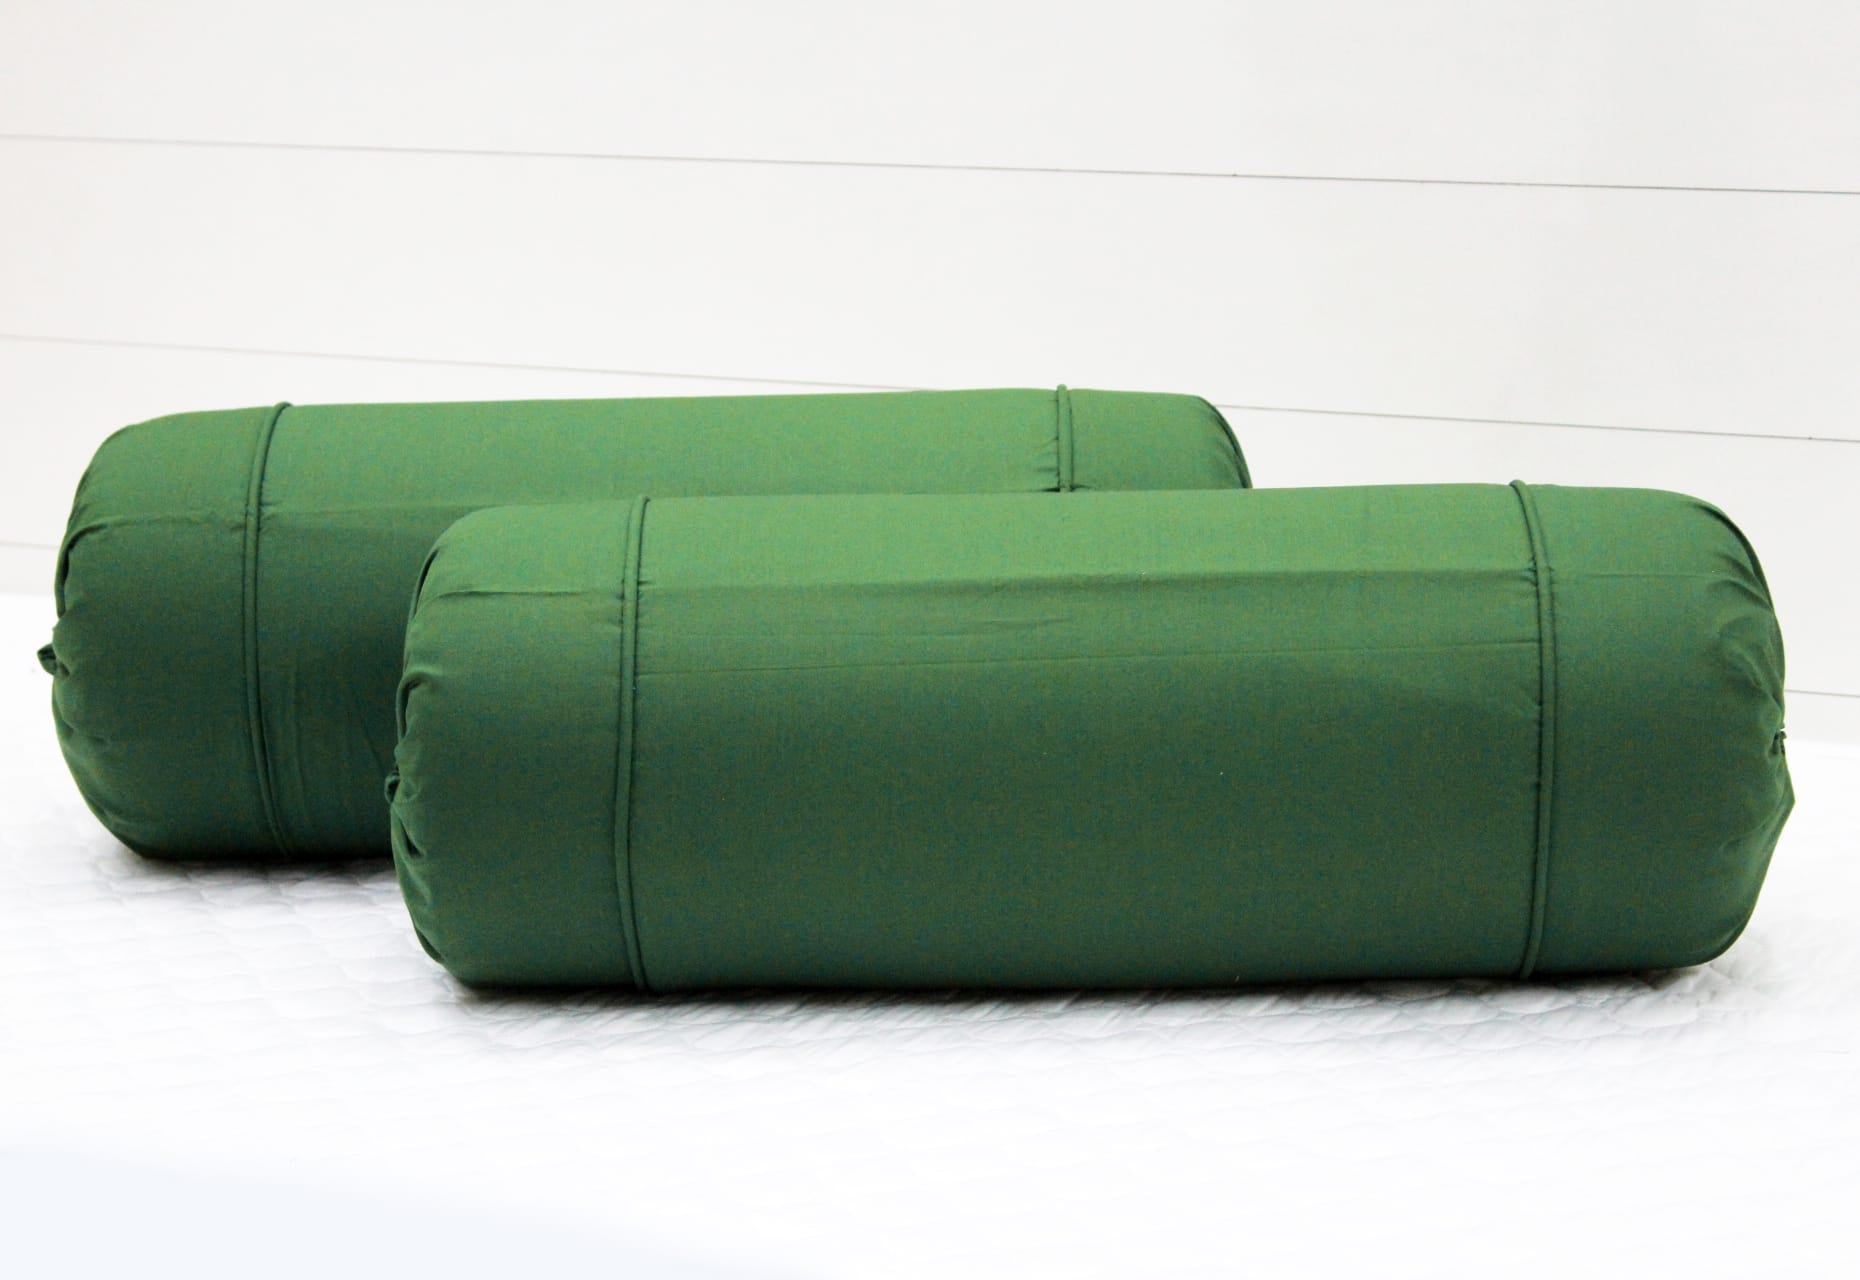 Comfortable Plain Cotton Bolster Cover Set 2pcs in Bottle Green online